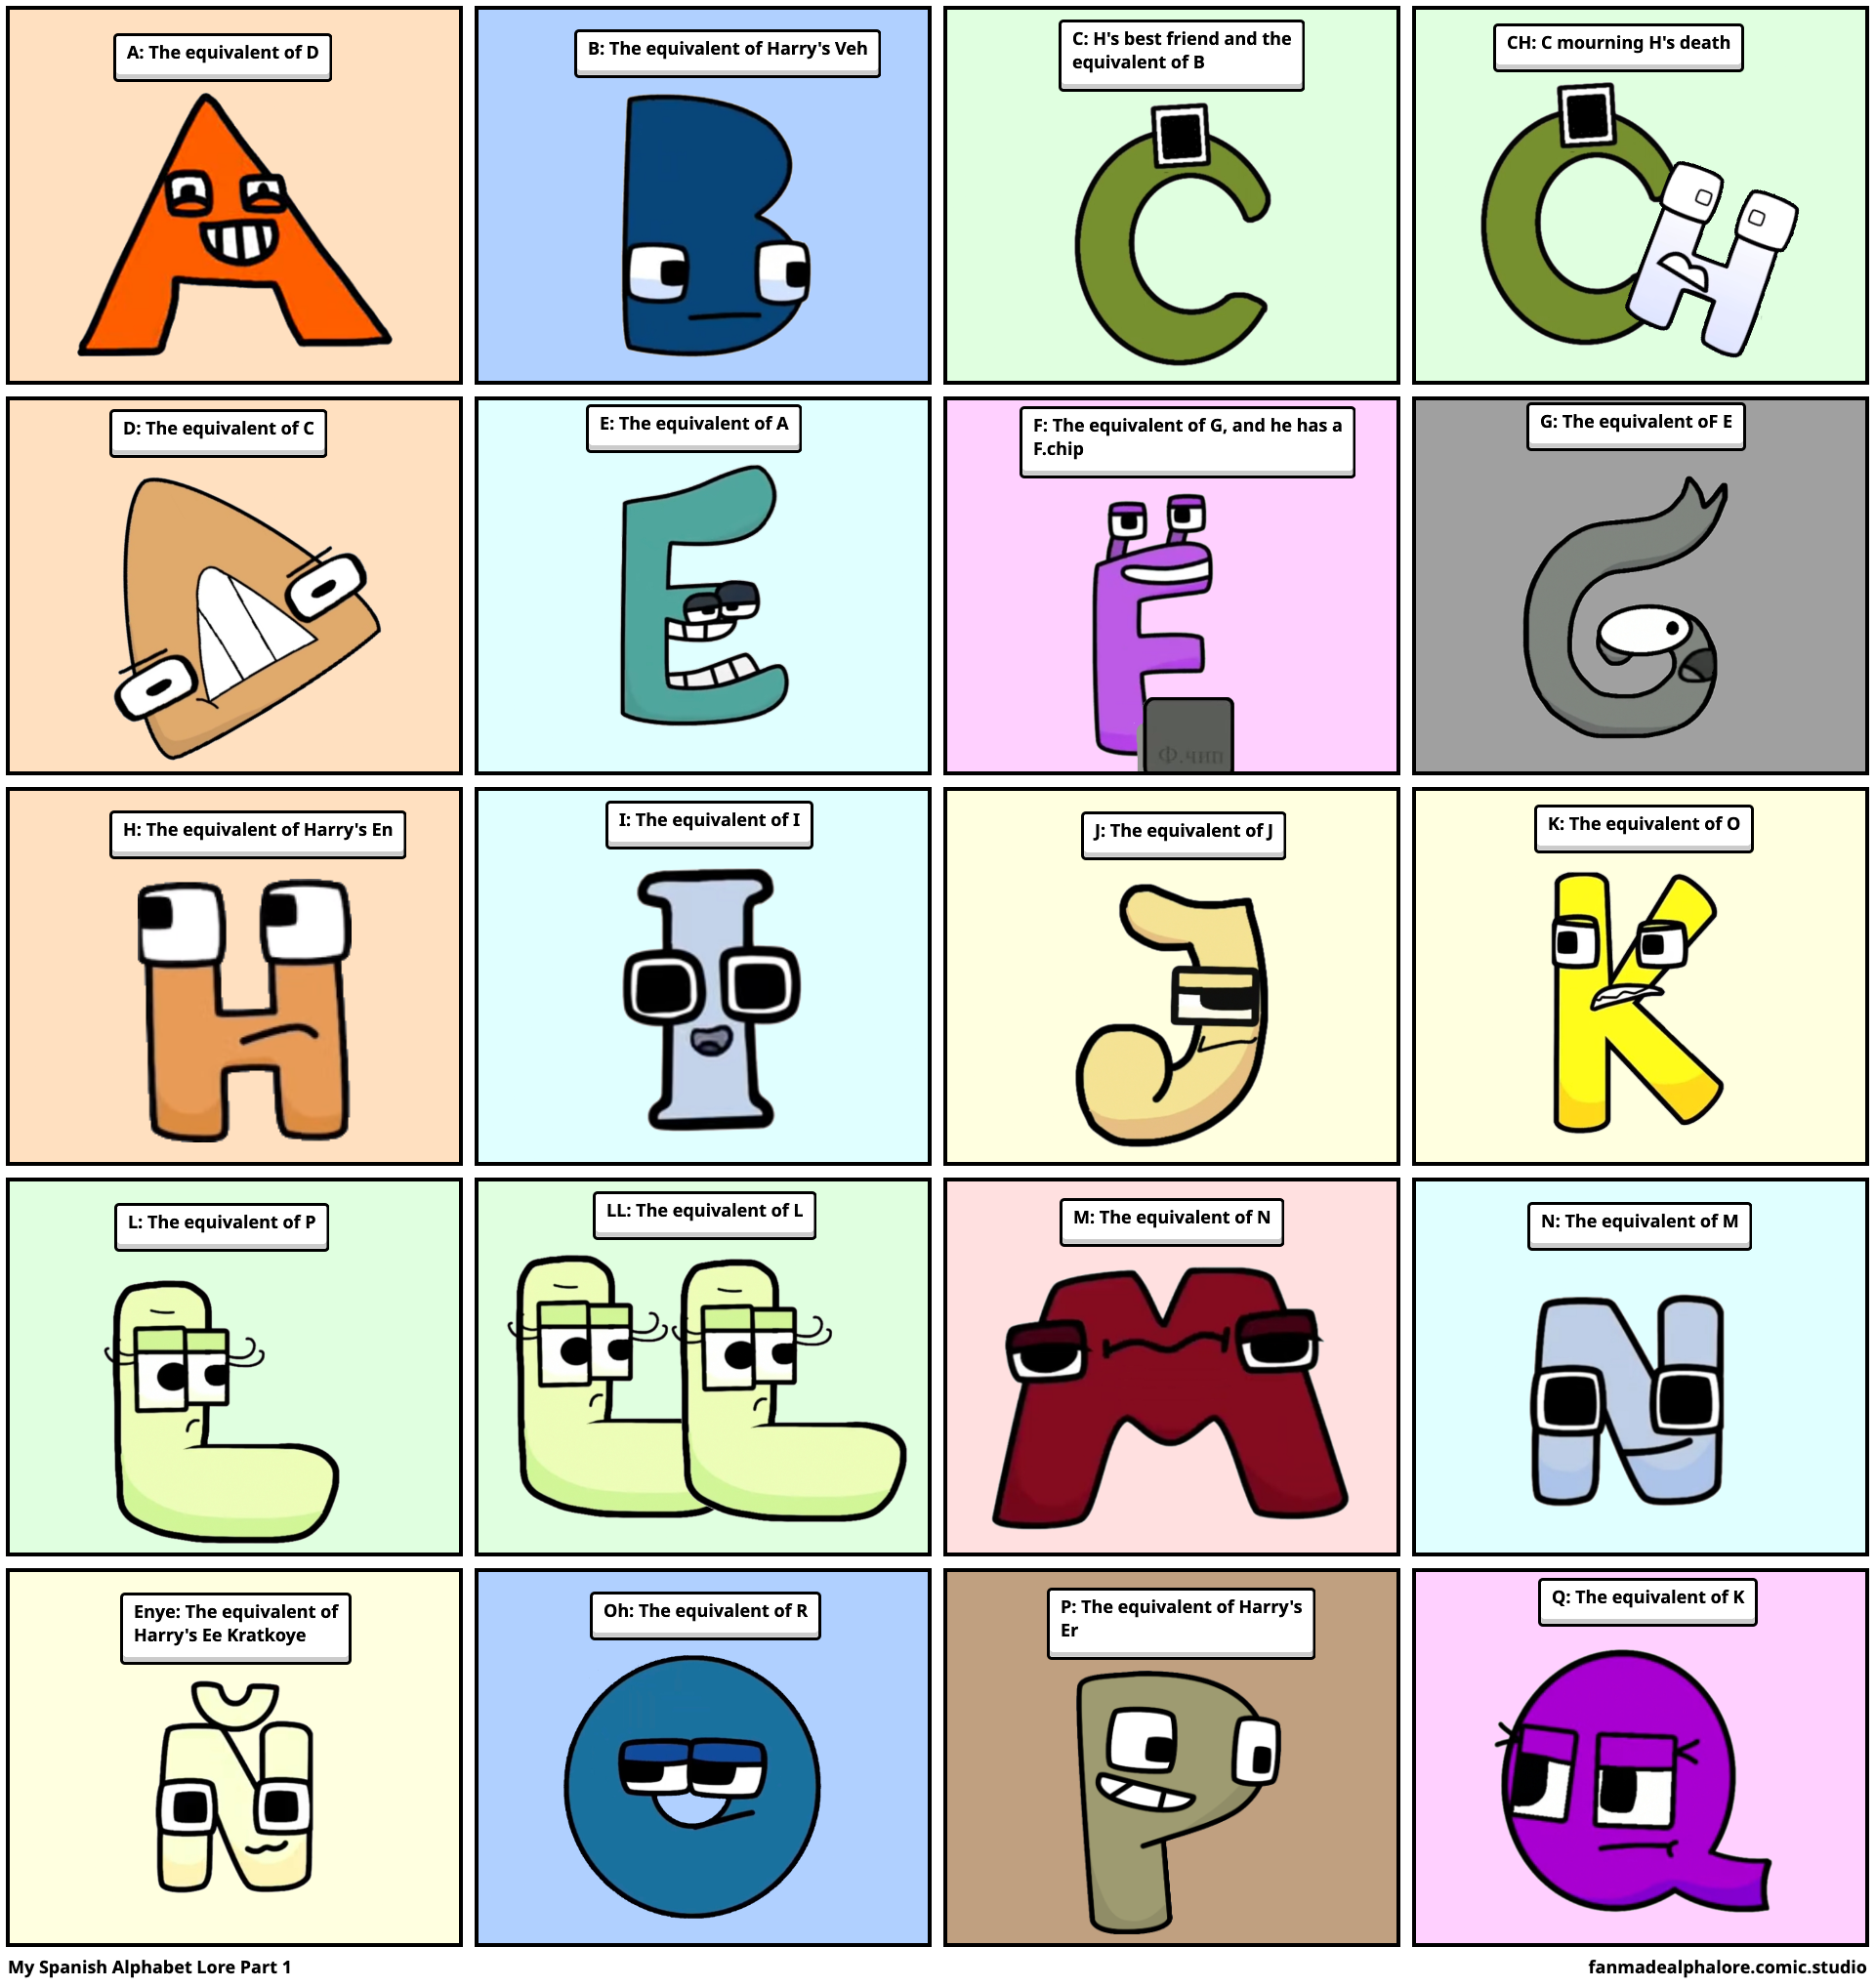 Flq Spanish Alphabet Lore Gay by alphabetl on DeviantArt